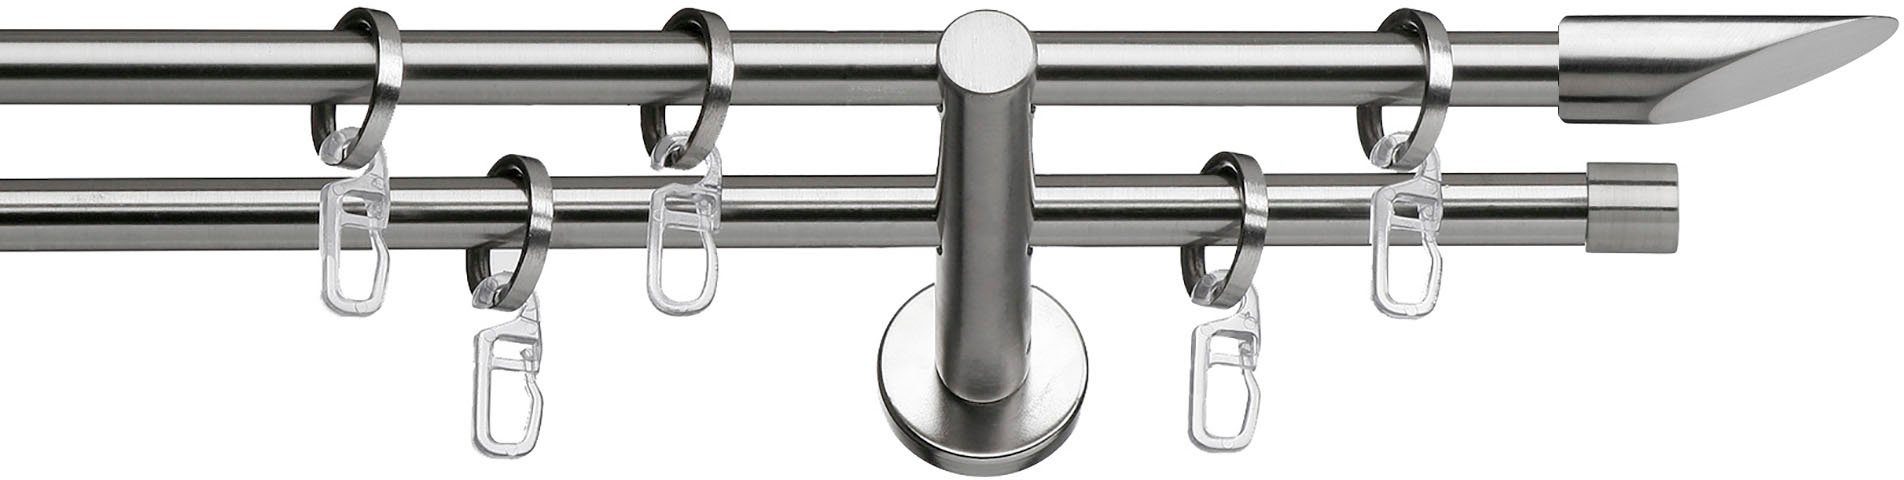 Gardinenstange Marbella, indeko, Ø 12 mm, 2-läufig, Fixmaß, verschraubt,  Stahl, Komplett-Set inkl. Ringen und Montagematerial